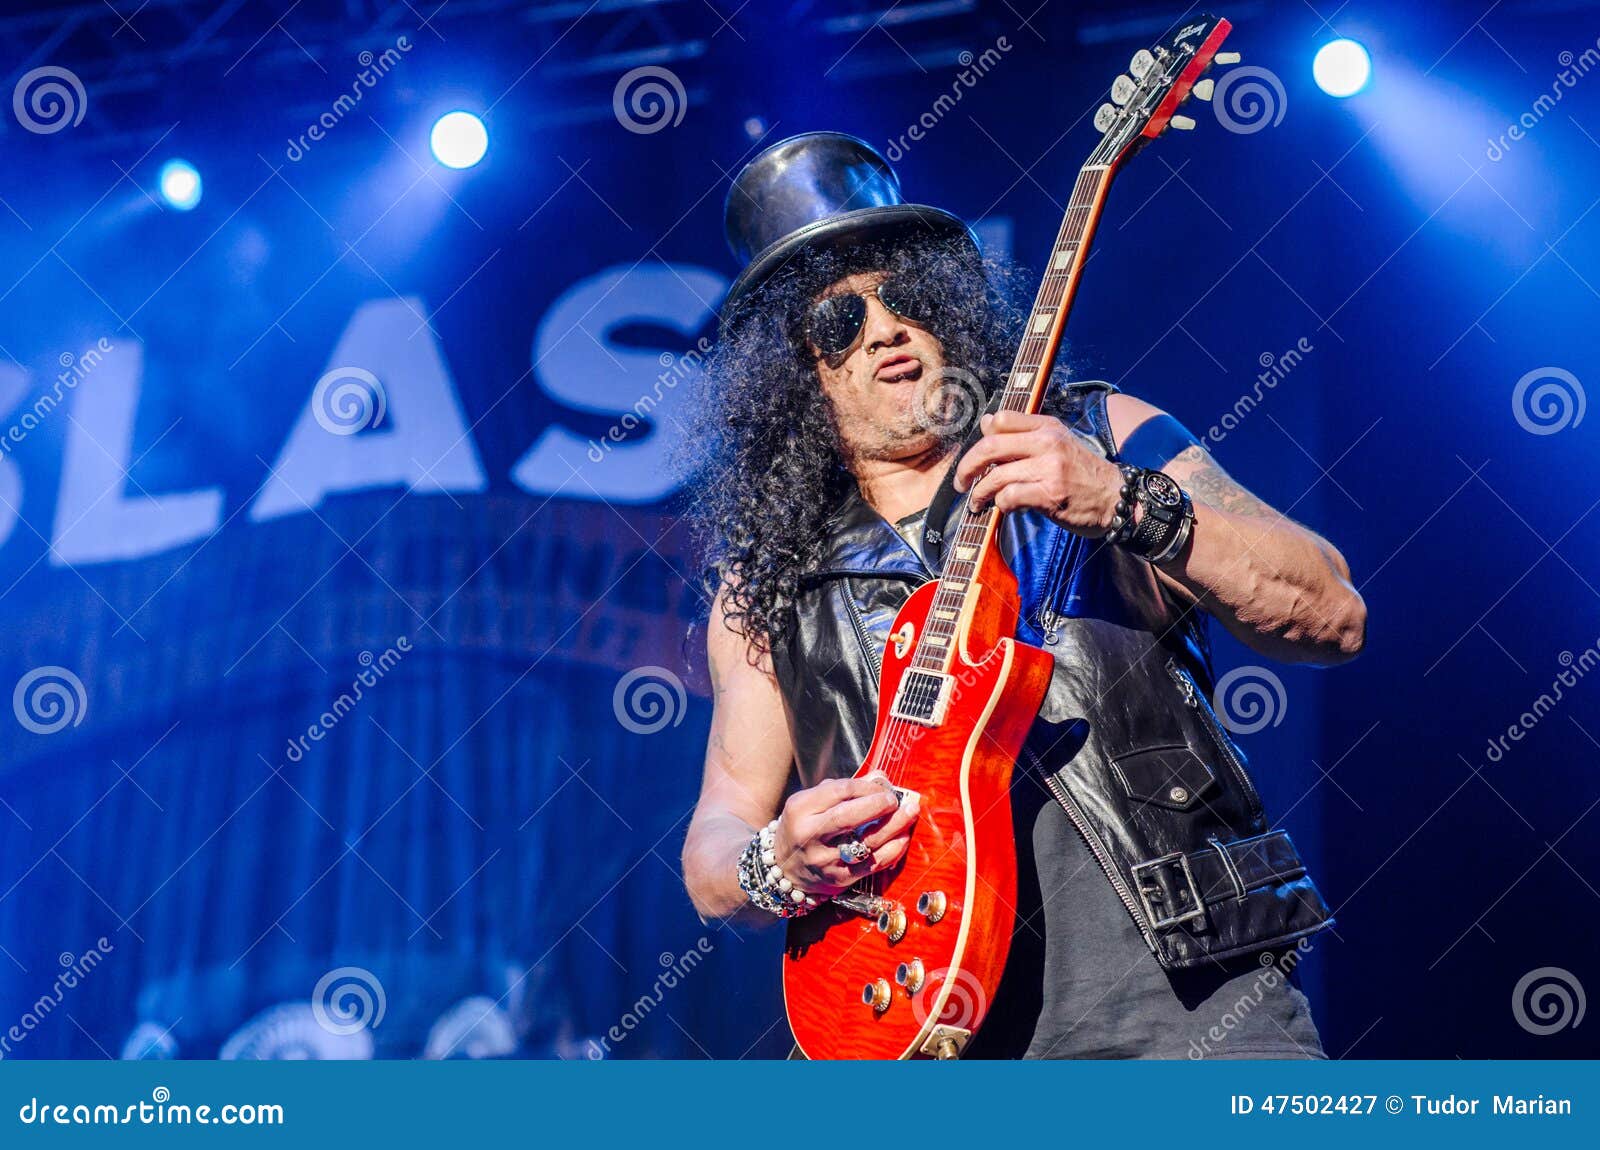 251 Slash Guitar Stock Photos - Free & Royalty-Free Stock Photos